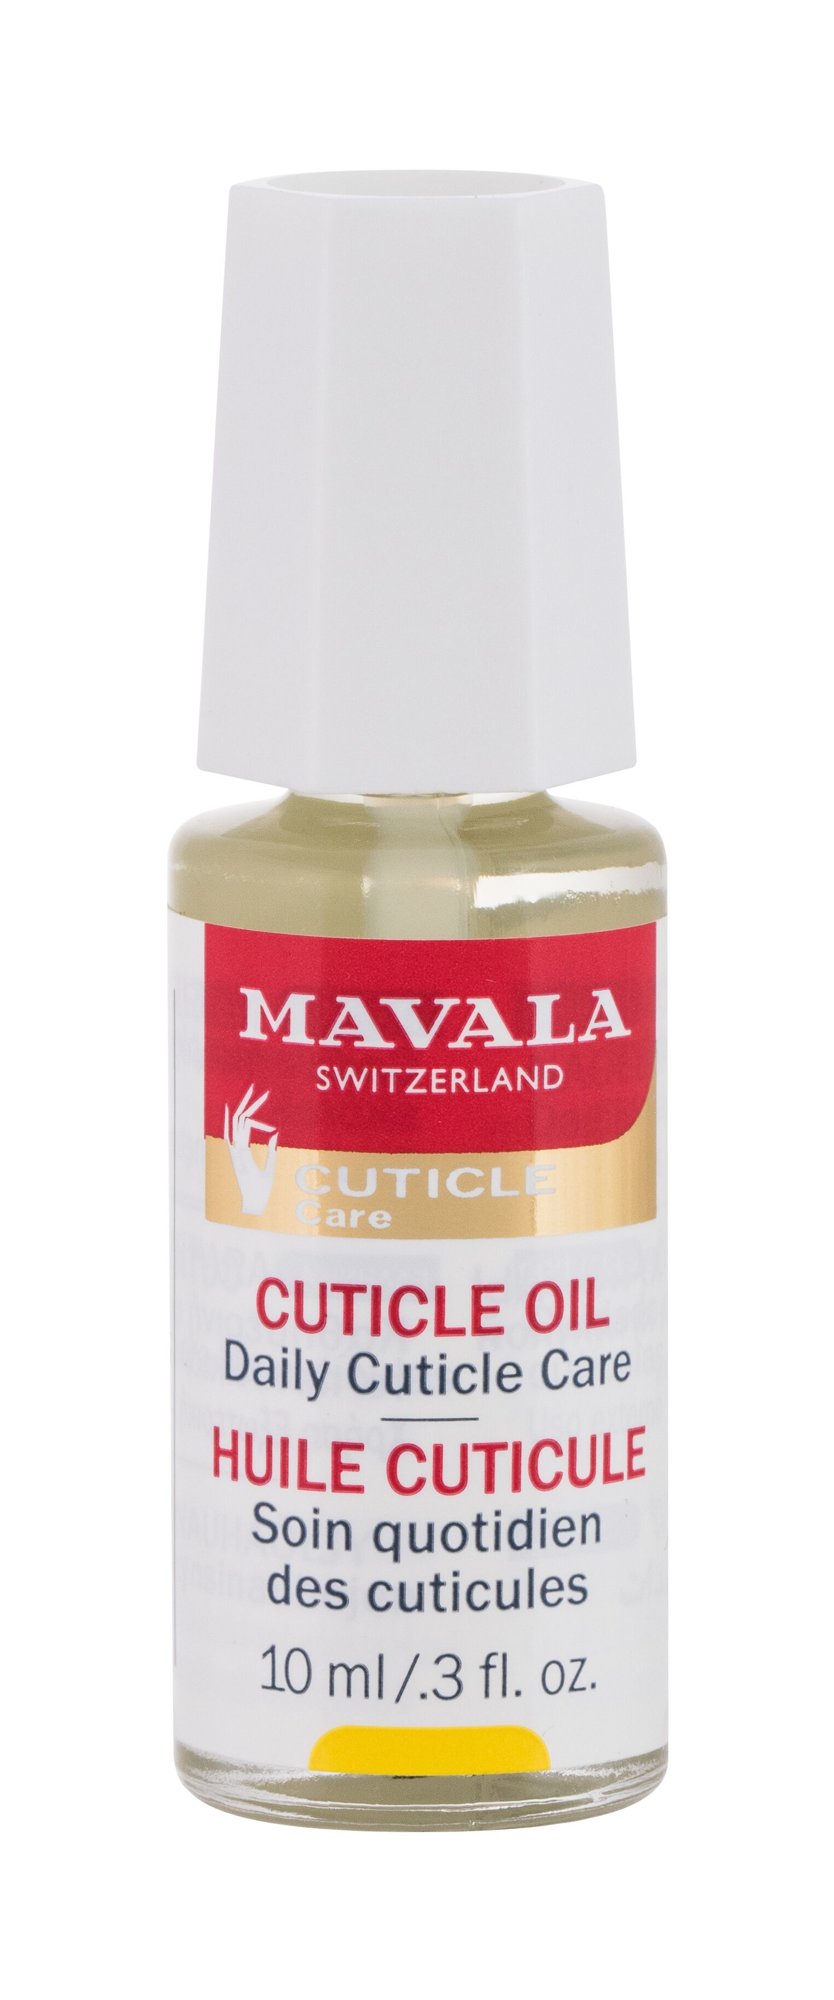 MAVALA Cuticle Care Cuticle Oil nagų priežiūrai